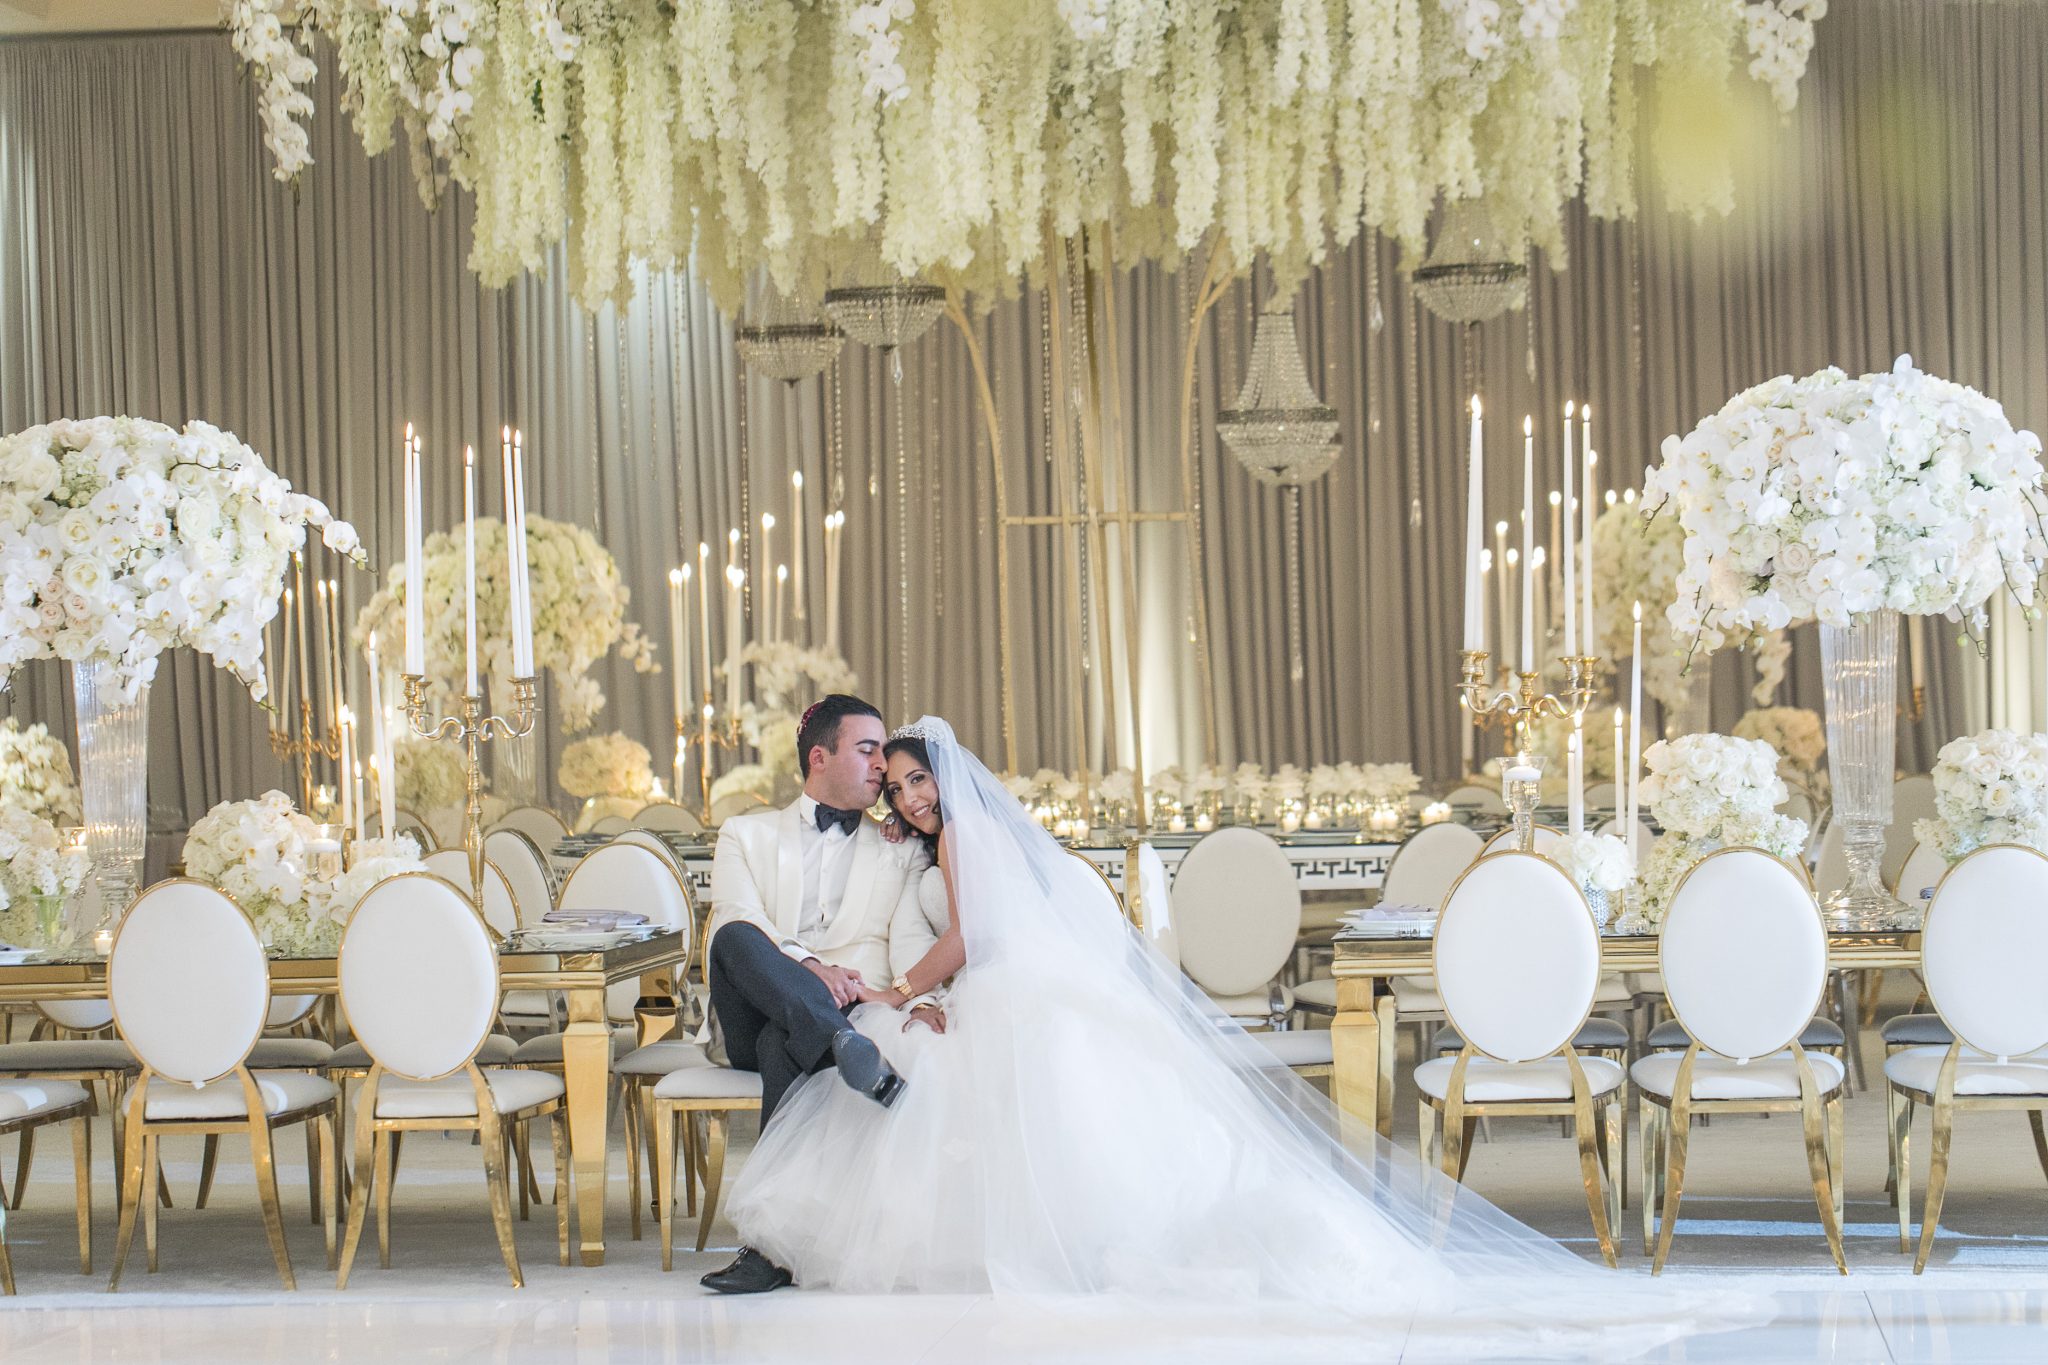 Nicolette & Jonathan | Wedding Highlight Video